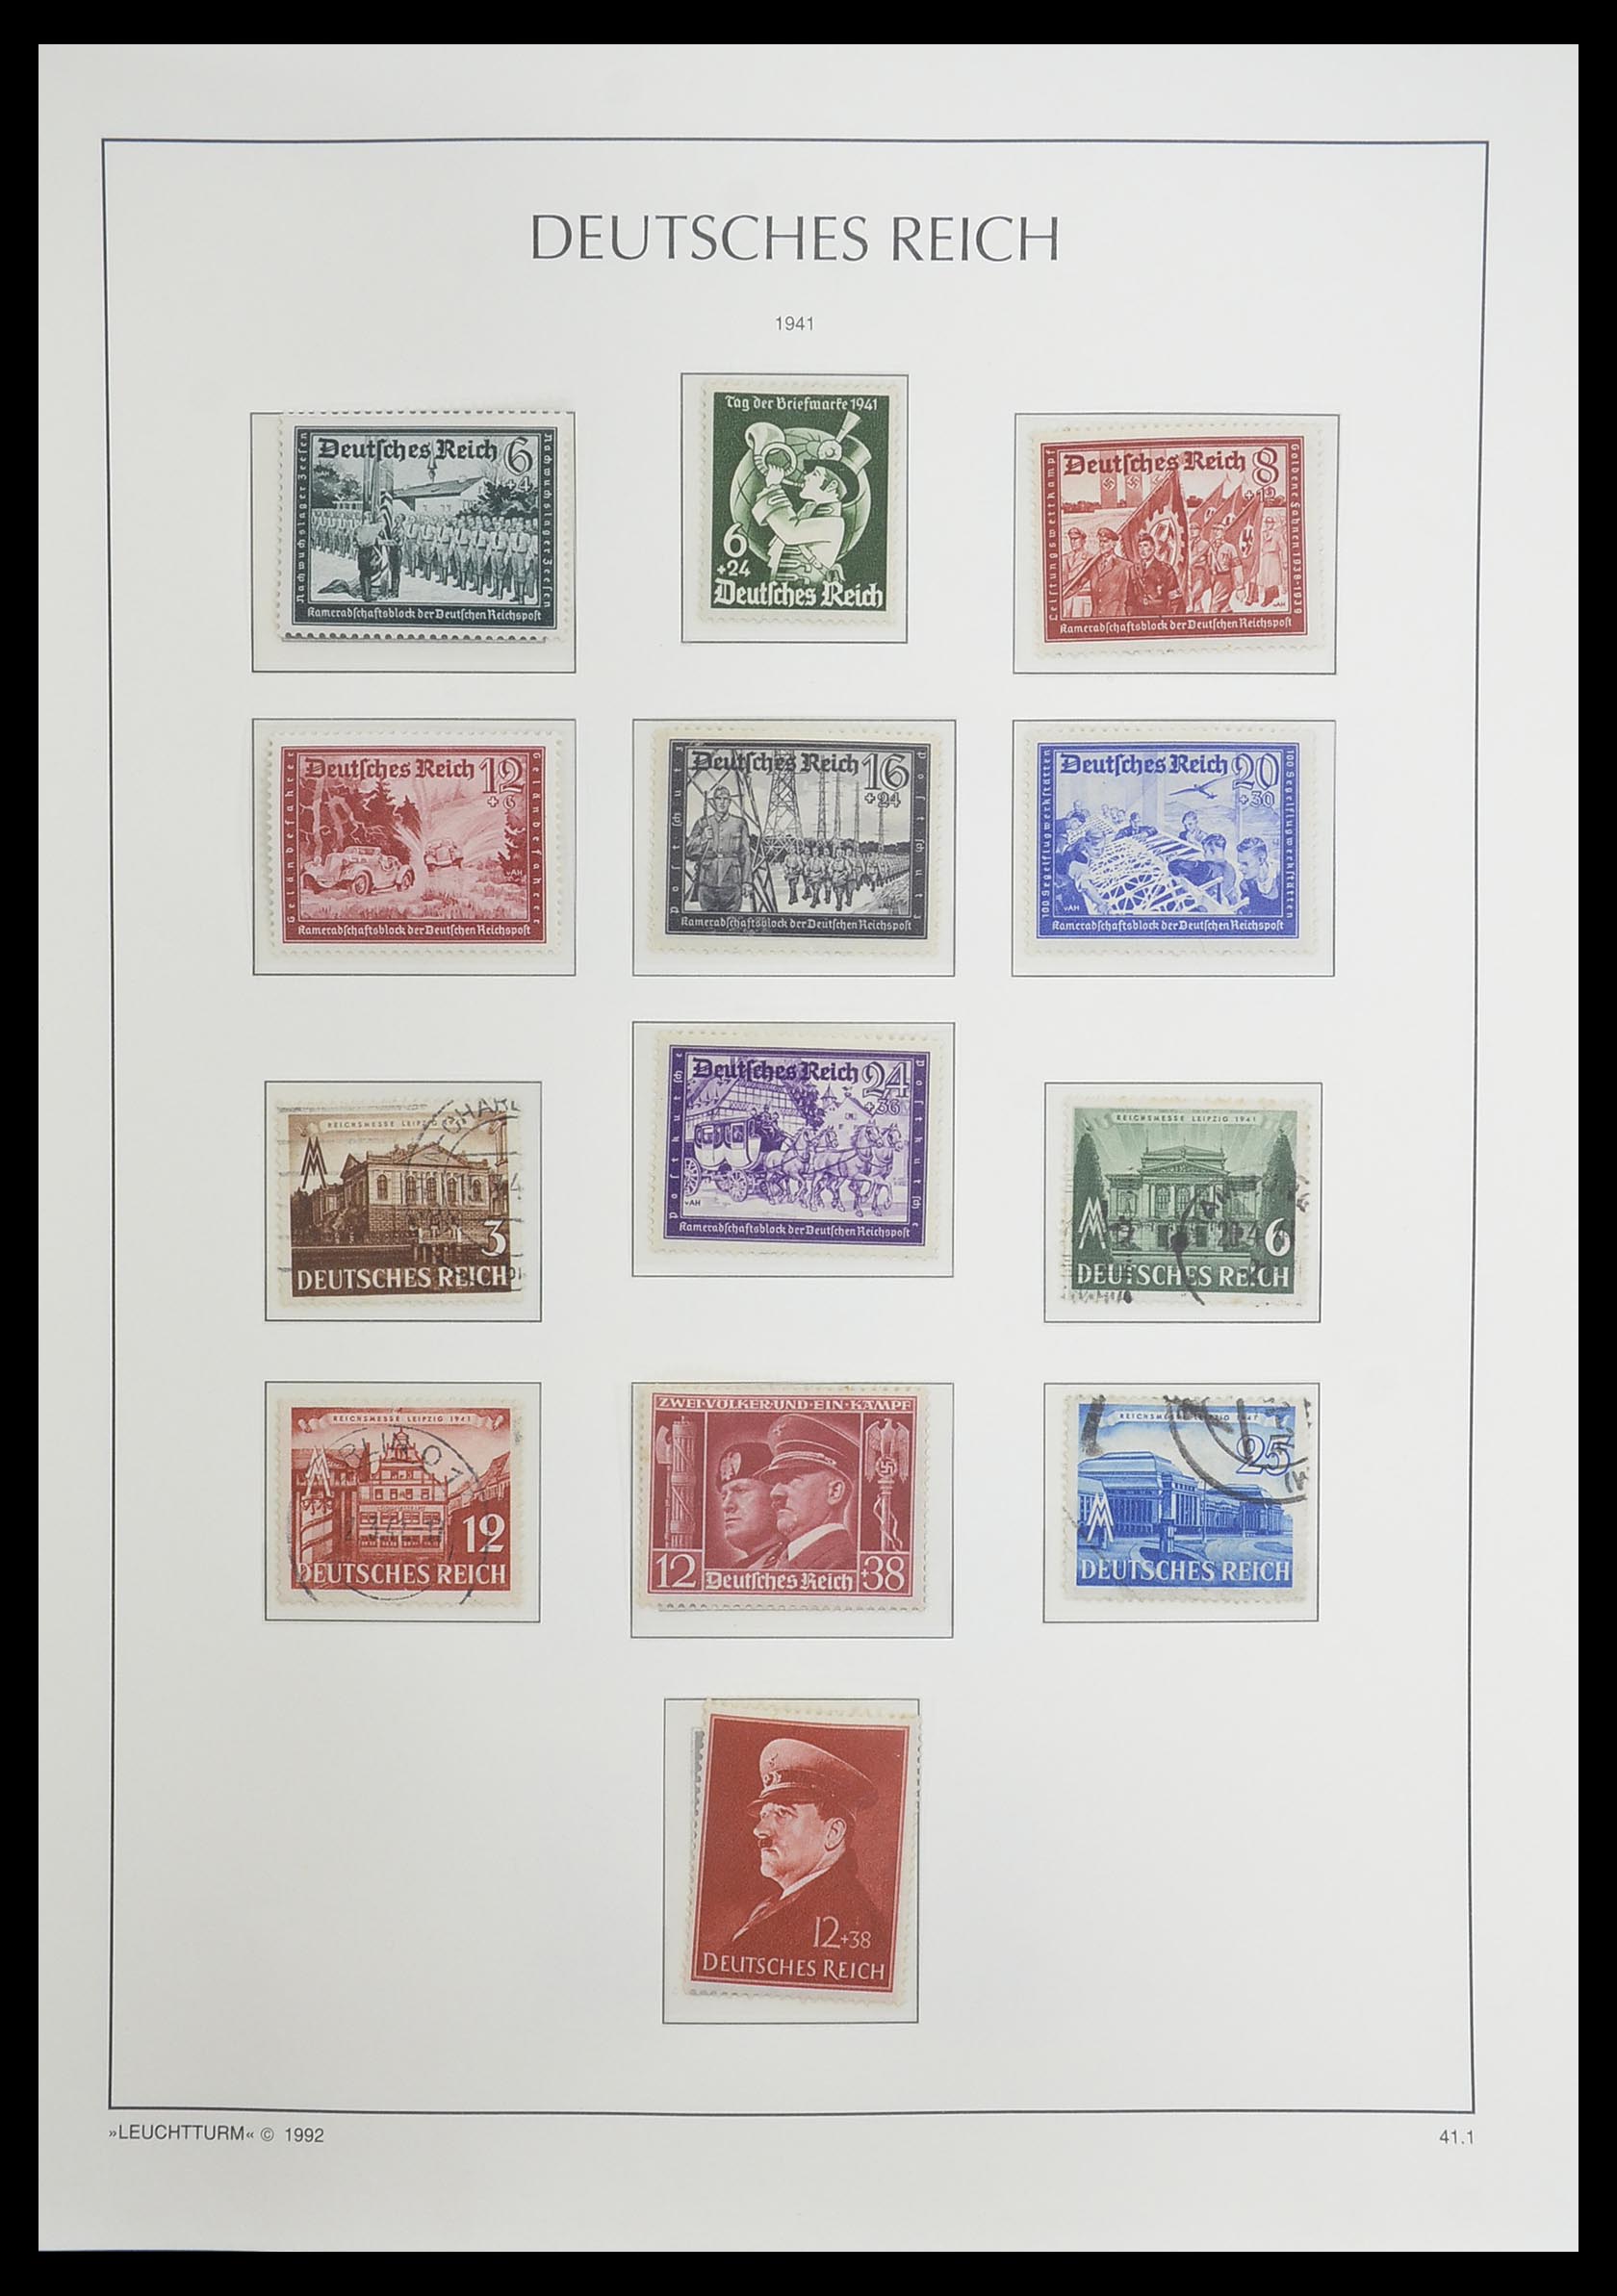 33455 082 - Stamp collection 33455 German Reich 1872-1945.